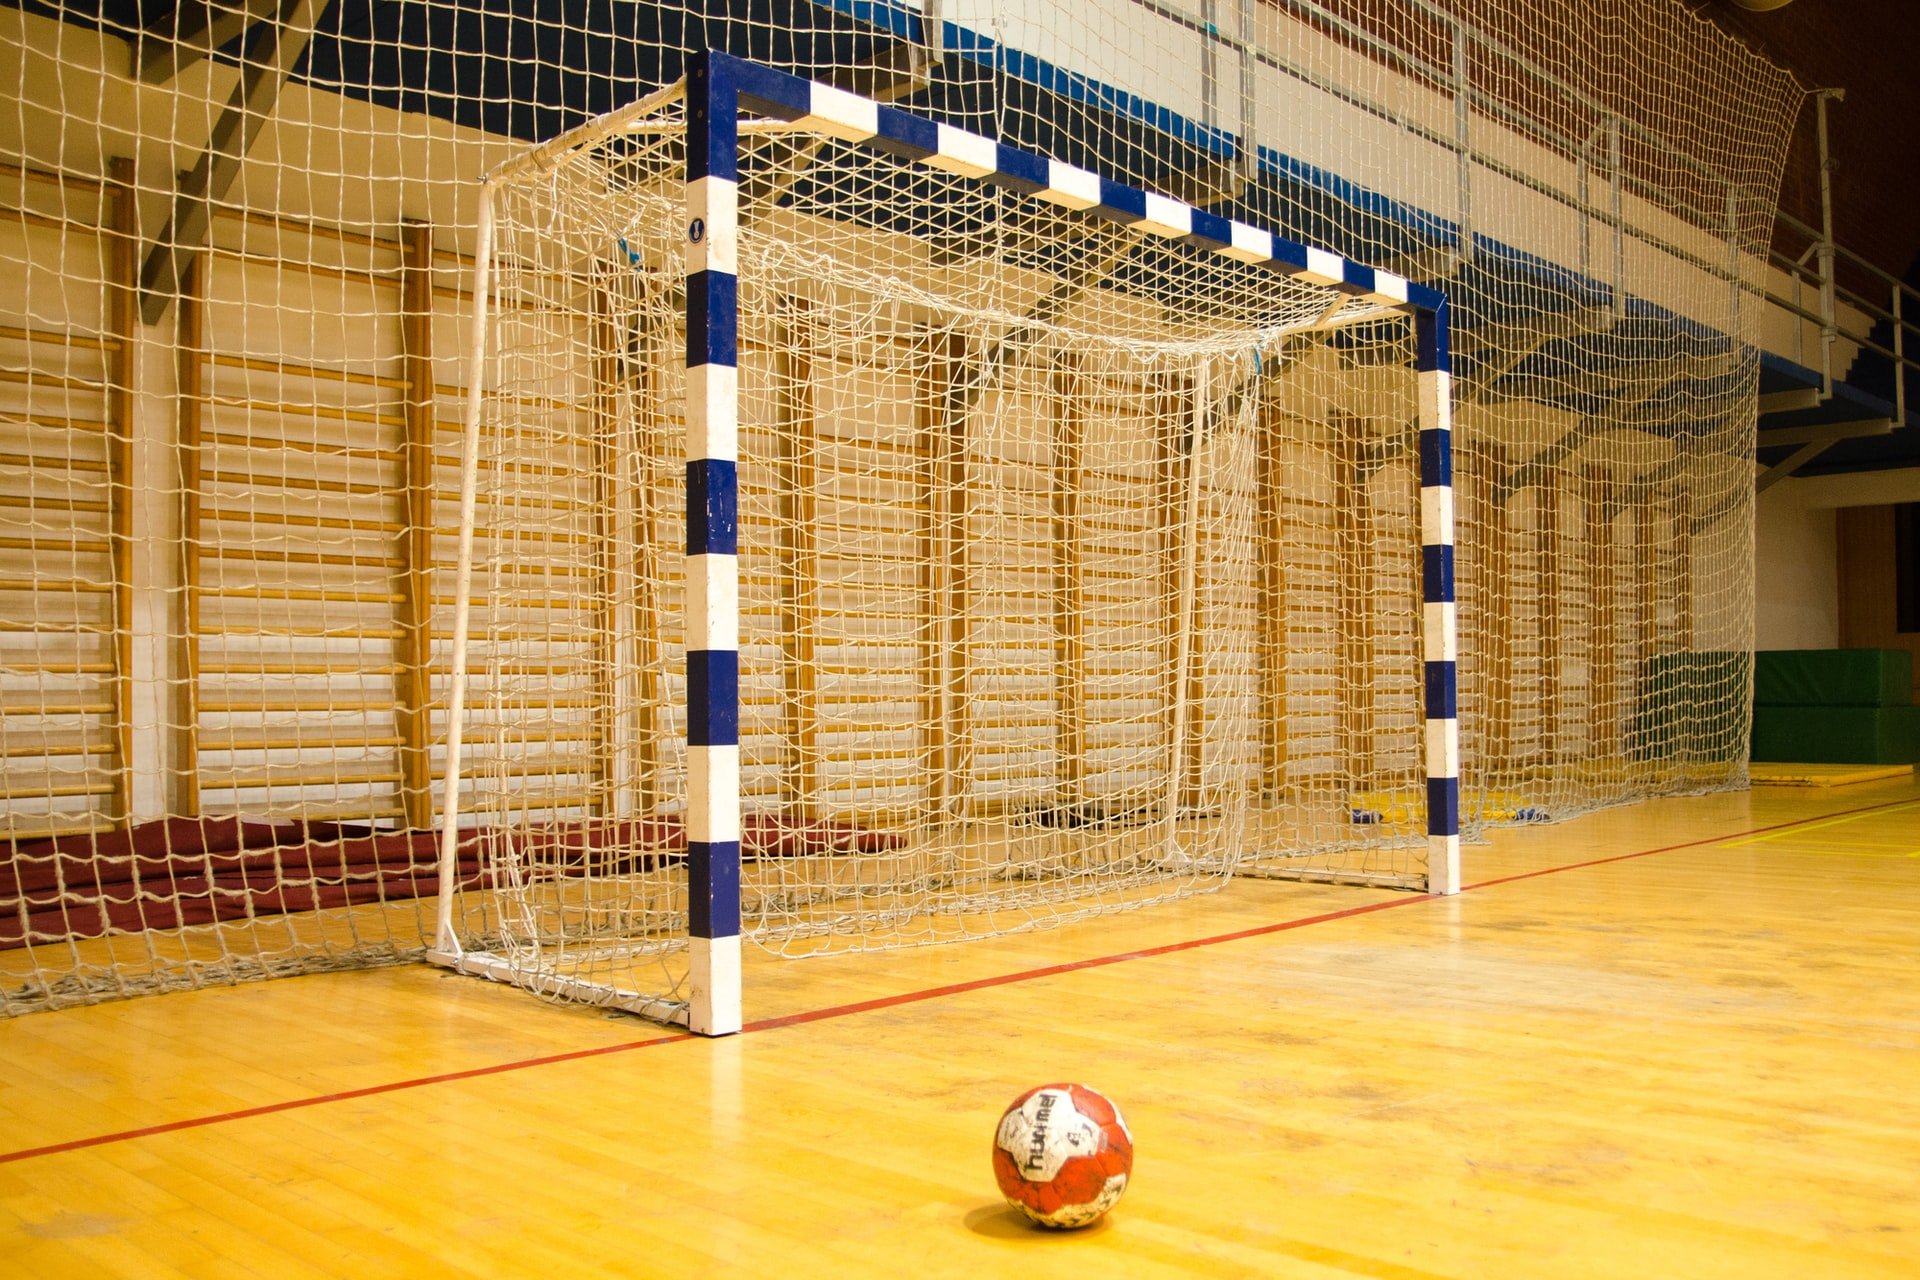 But De Handball De Salle De Sport